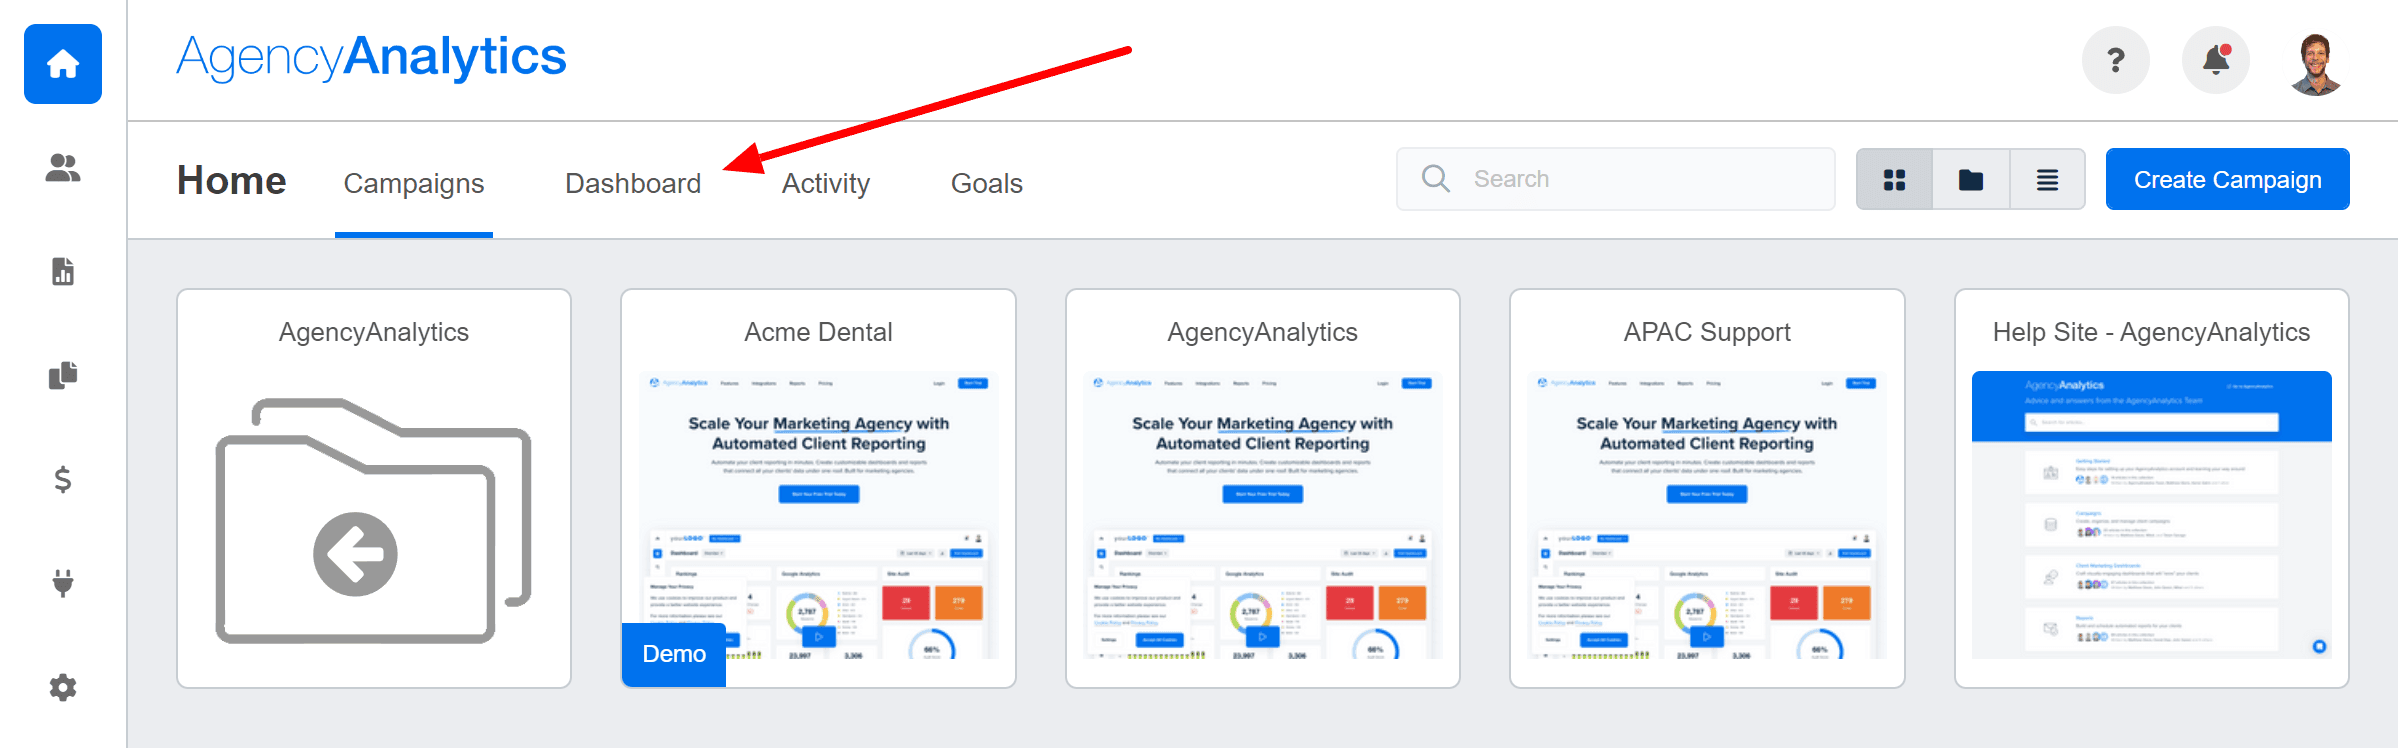 Screenshot of the AgencyAnalytics Dashboard Section